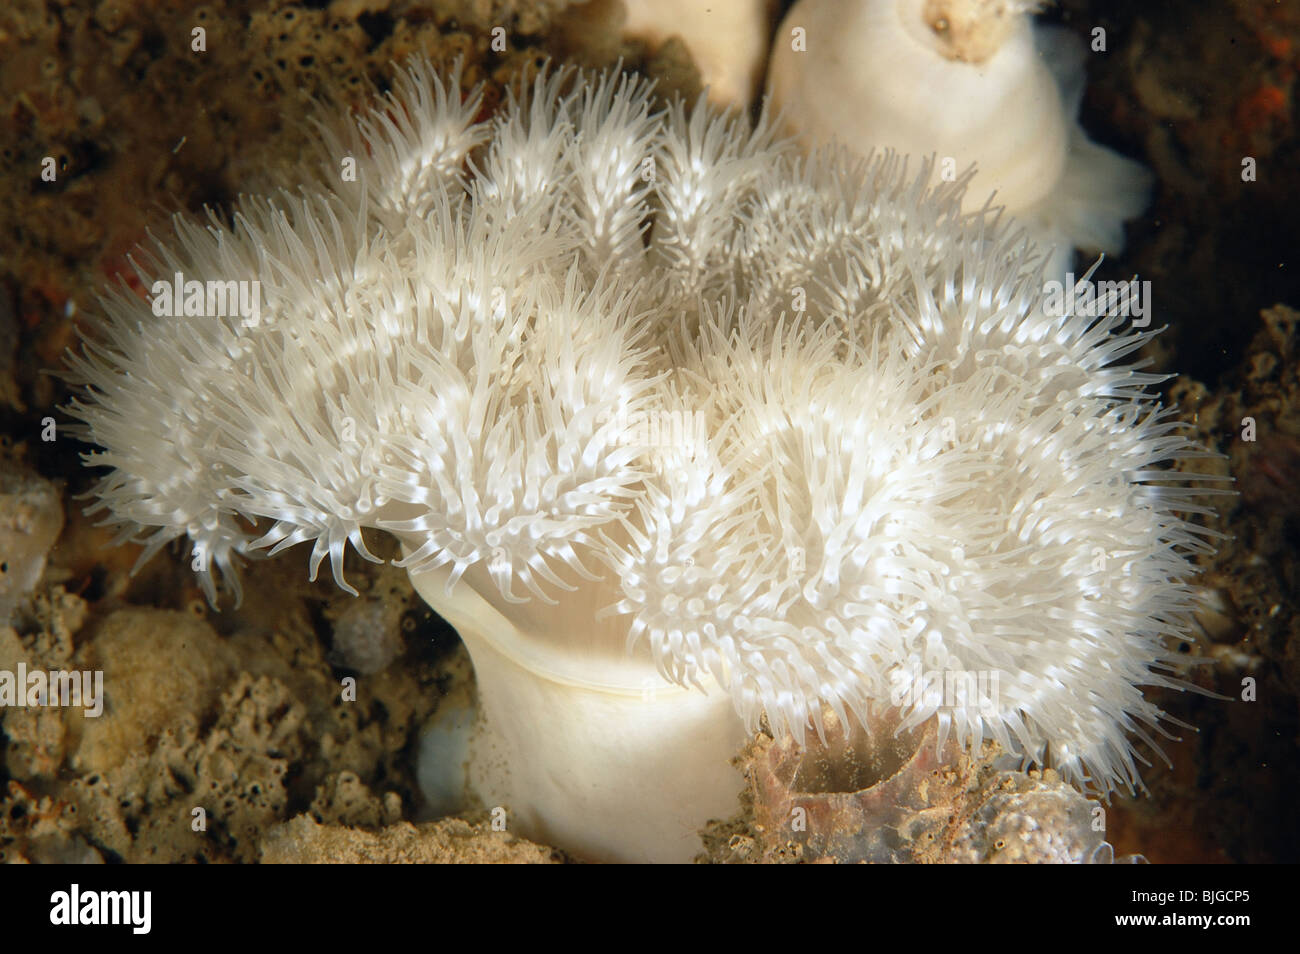 Plumose anemone,Metridium senile,Ferrybrige portland, dorset. November 2008. Stock Photo